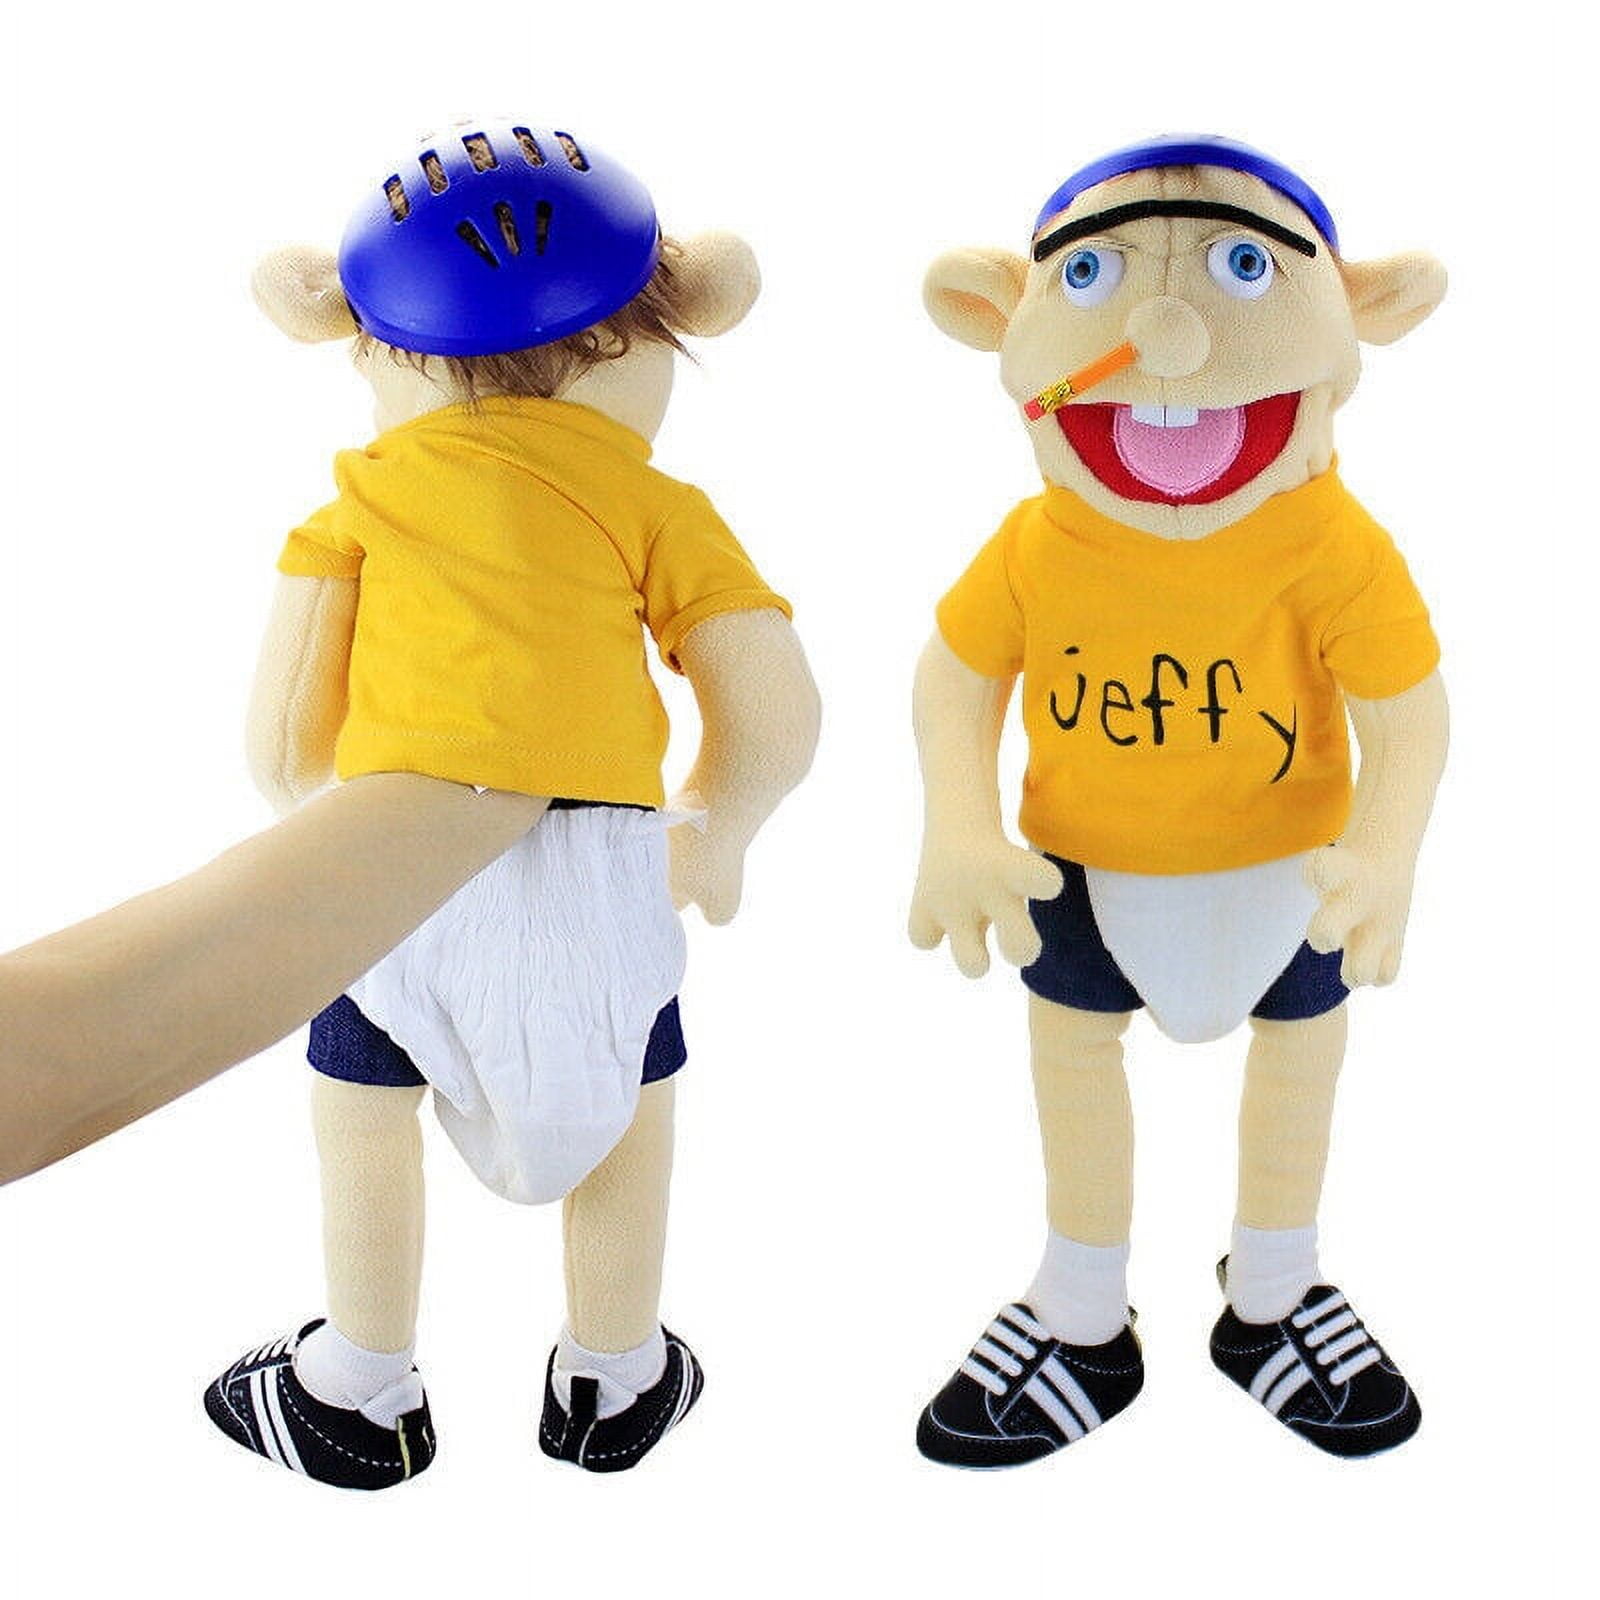 Rapper Jeffy Puppet Hand Puppet Plush Toy 60cm Stuffed Doll Kids gift new